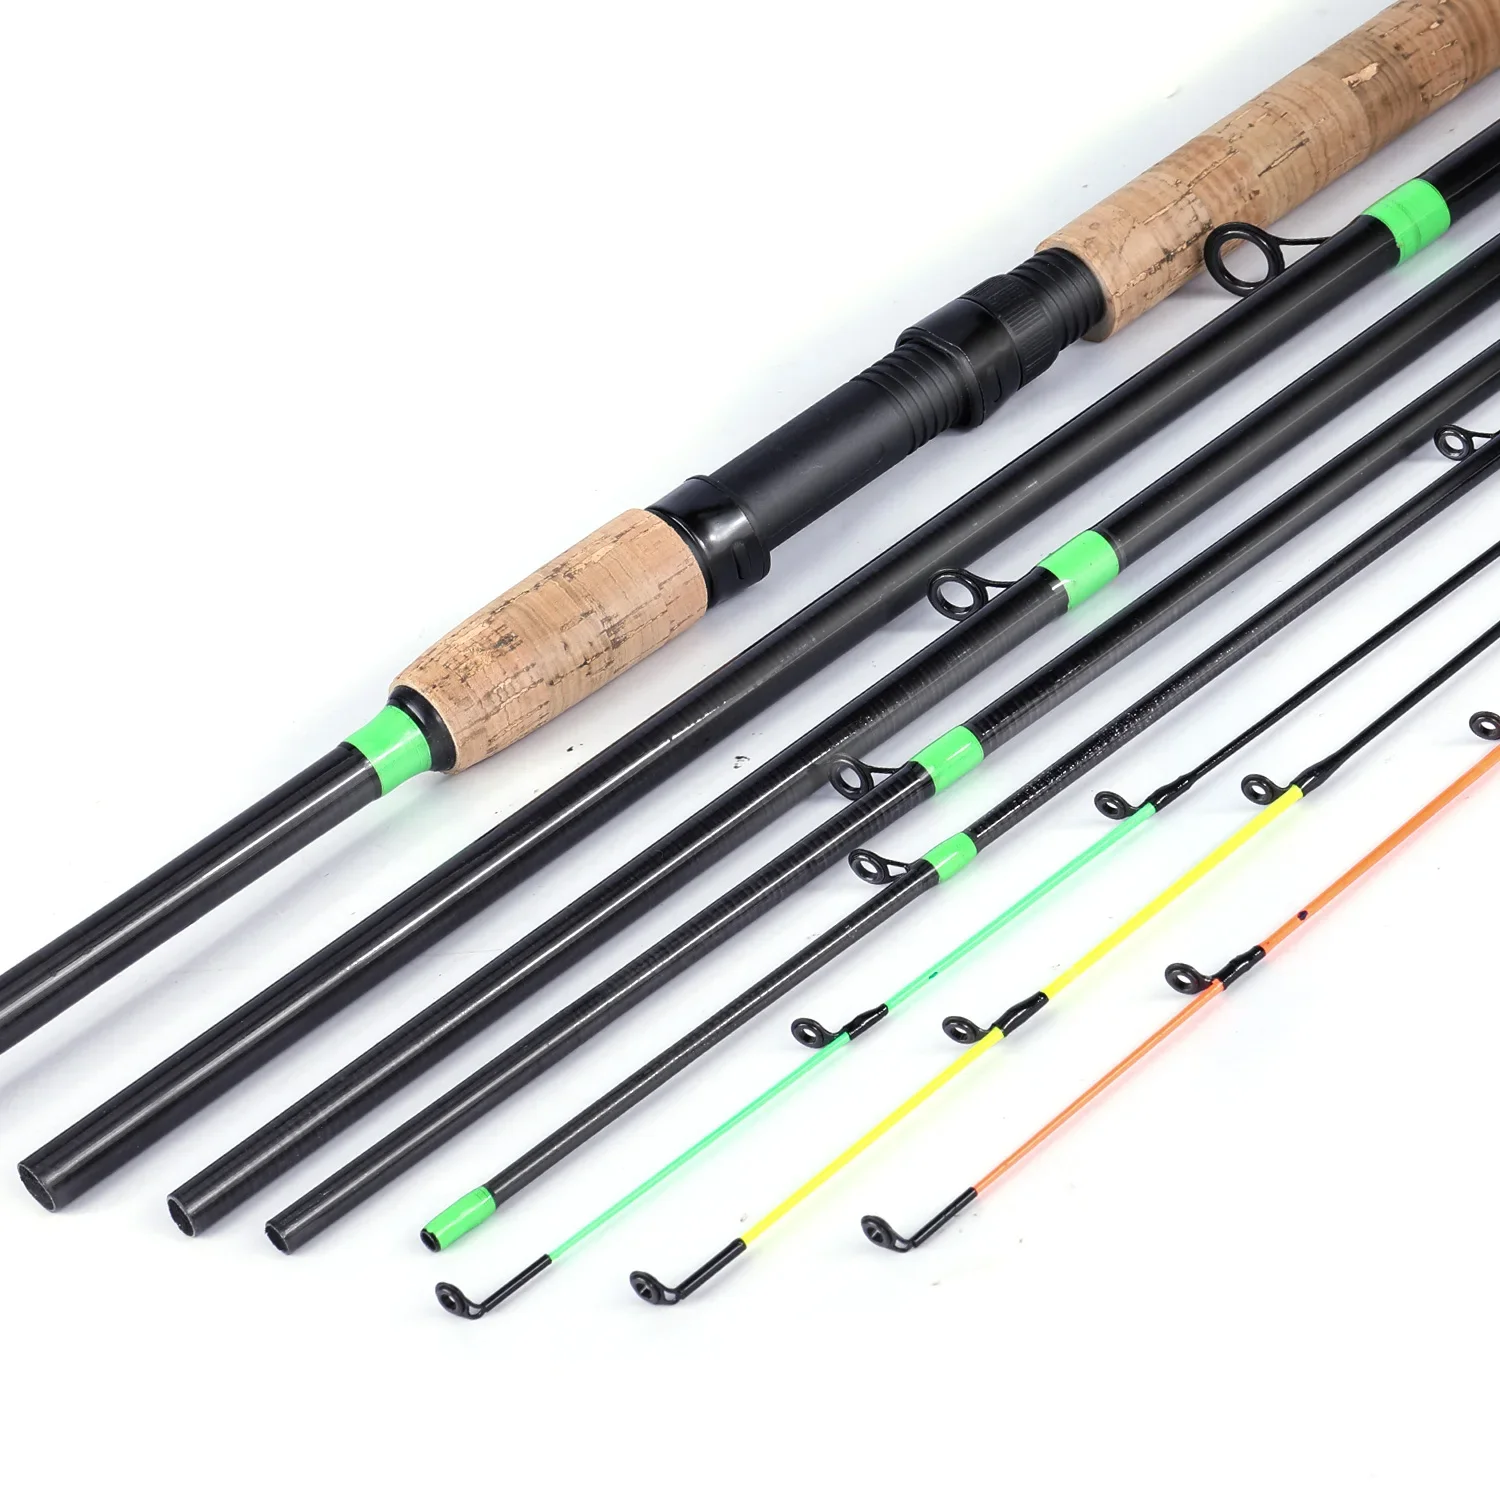 Sougayilang Feeder Fishing Rod Cork Handle Carbon Fibre Spinning Fishing  Rods 3M L M H Power 30-120g Lure Weight Carp Pole Pesca - AliExpress